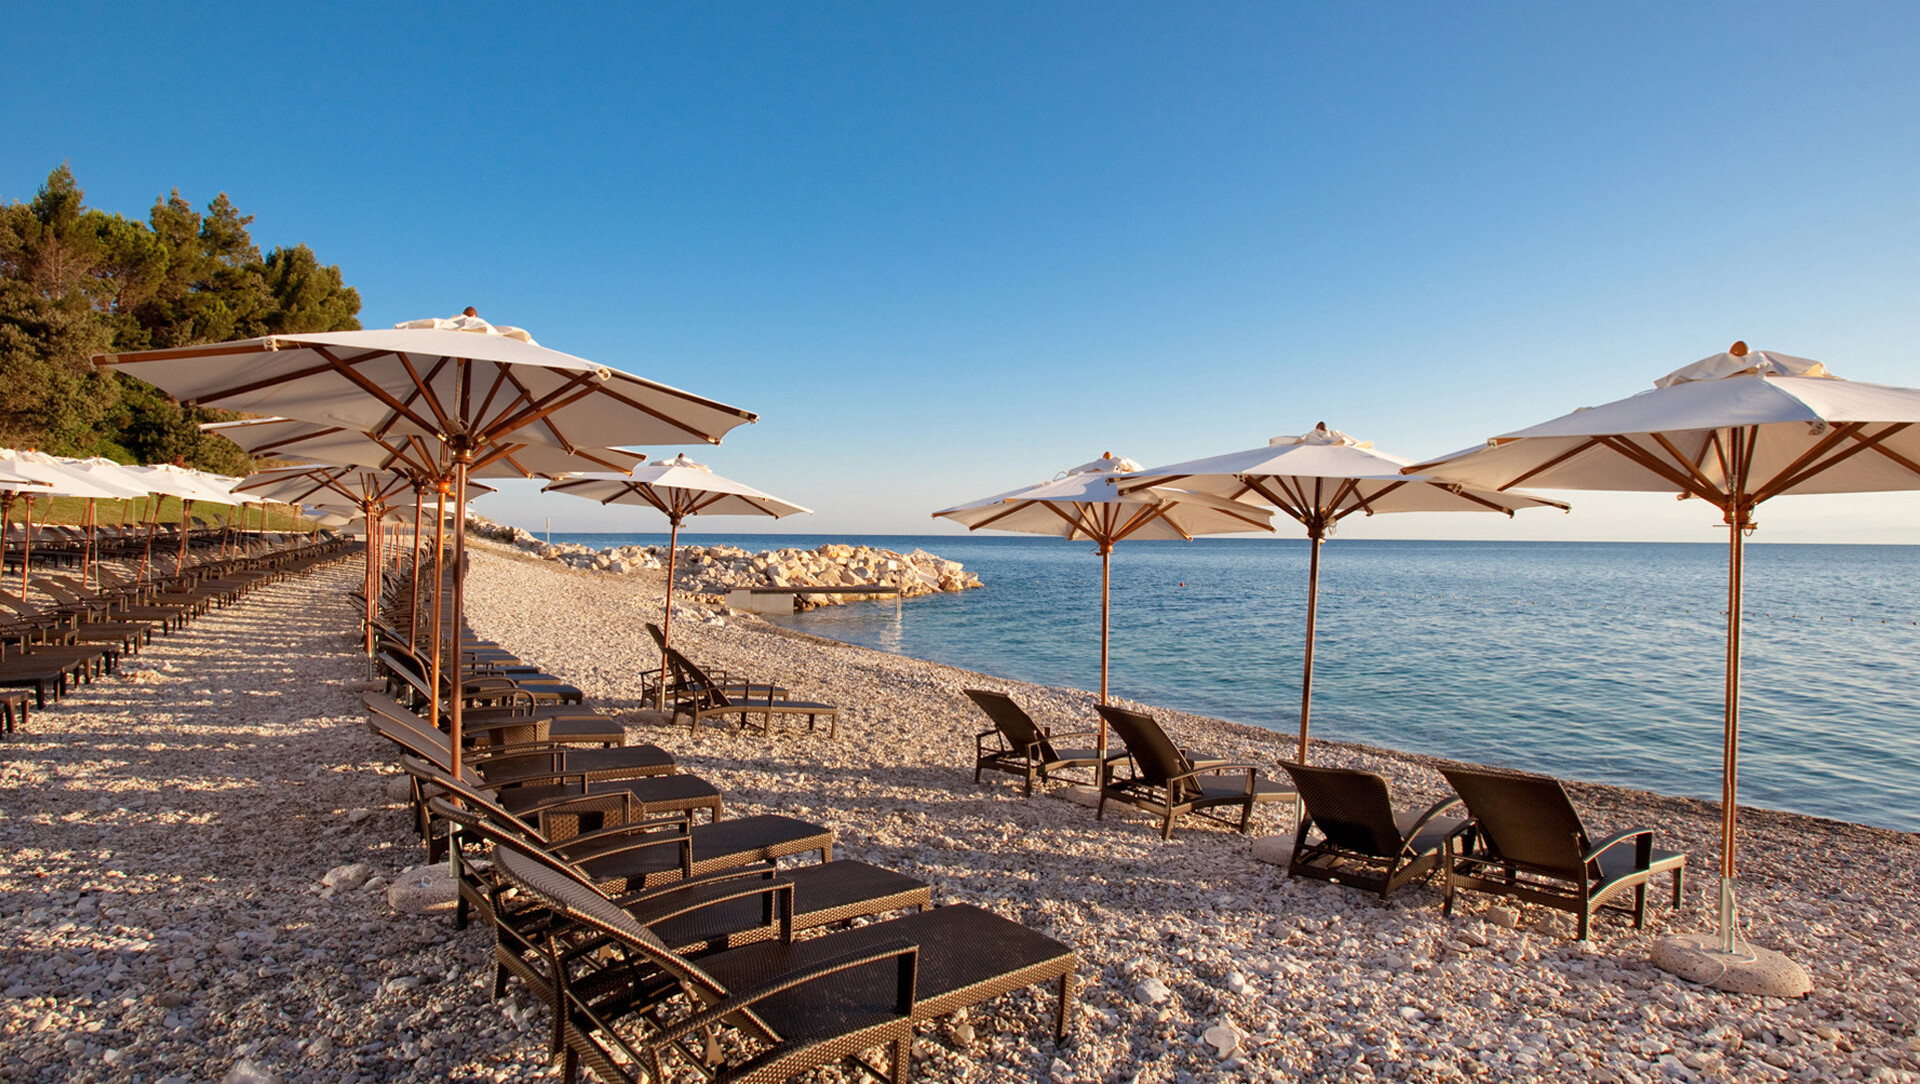 Golfreisebericht über Kroatien, Istrien - Kempinski Hotel Adriatic